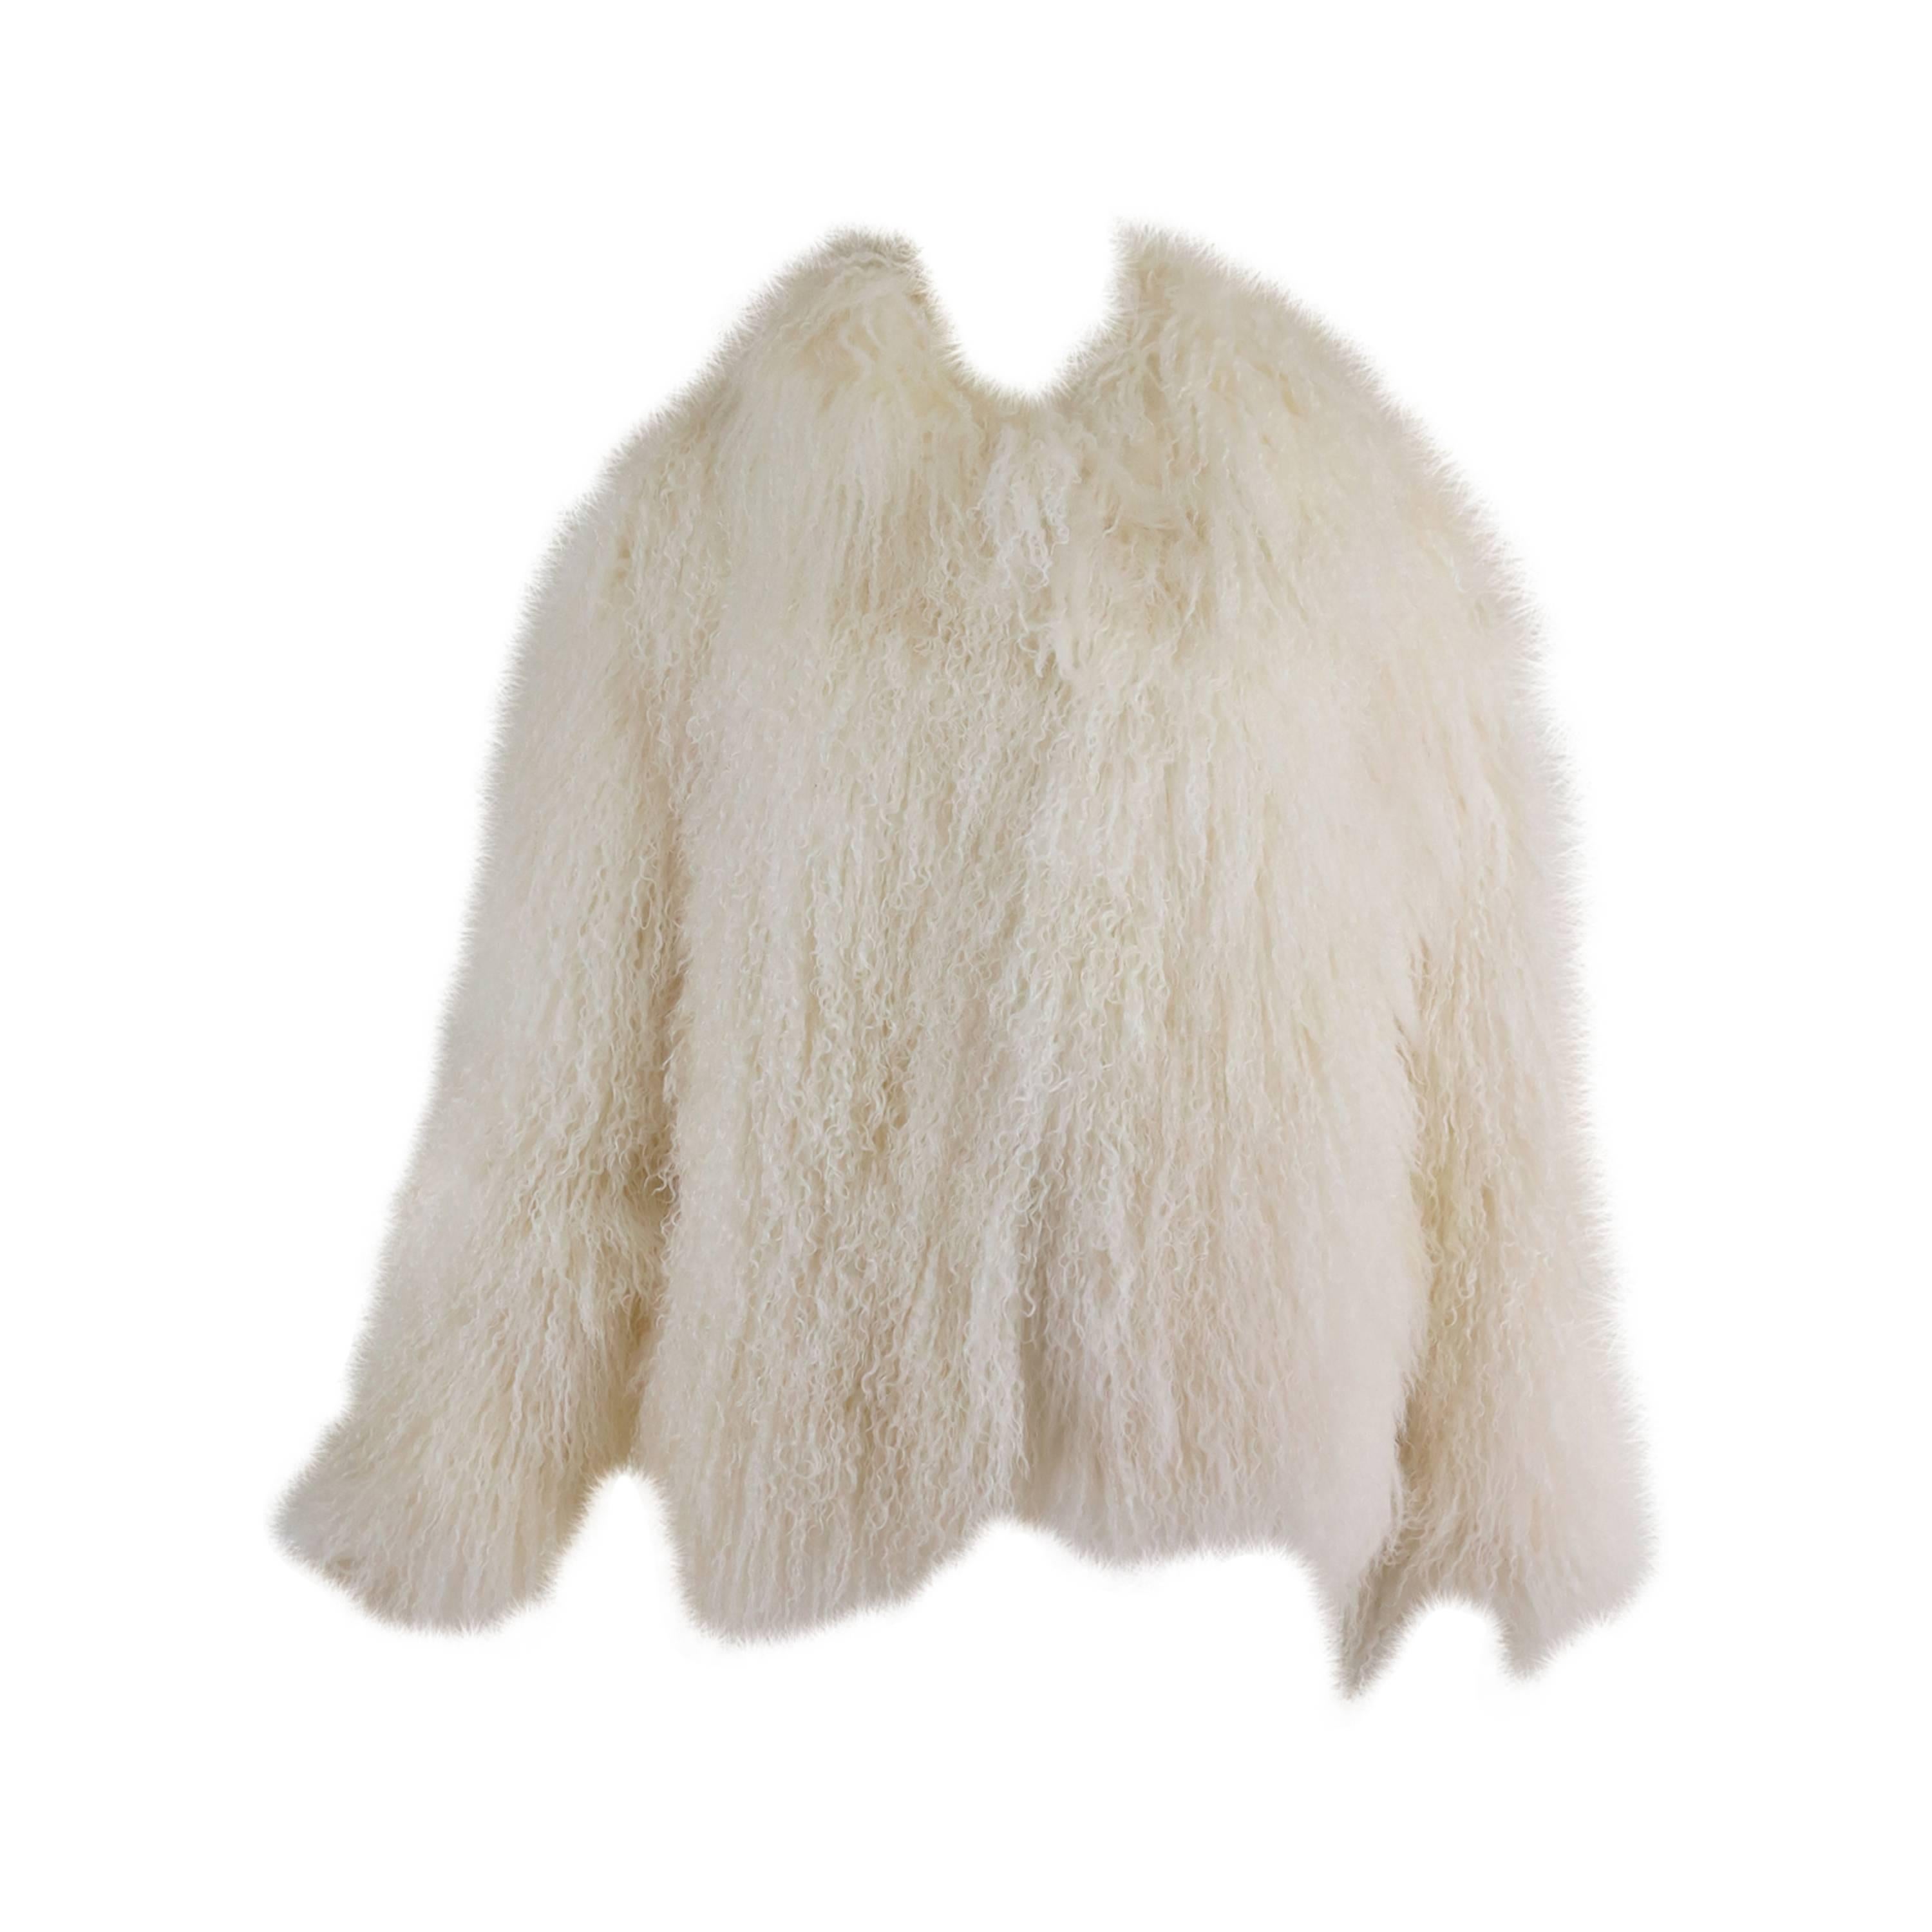 Mongolian lamb fur jacket in white Marvin Richards 1980s Unworn